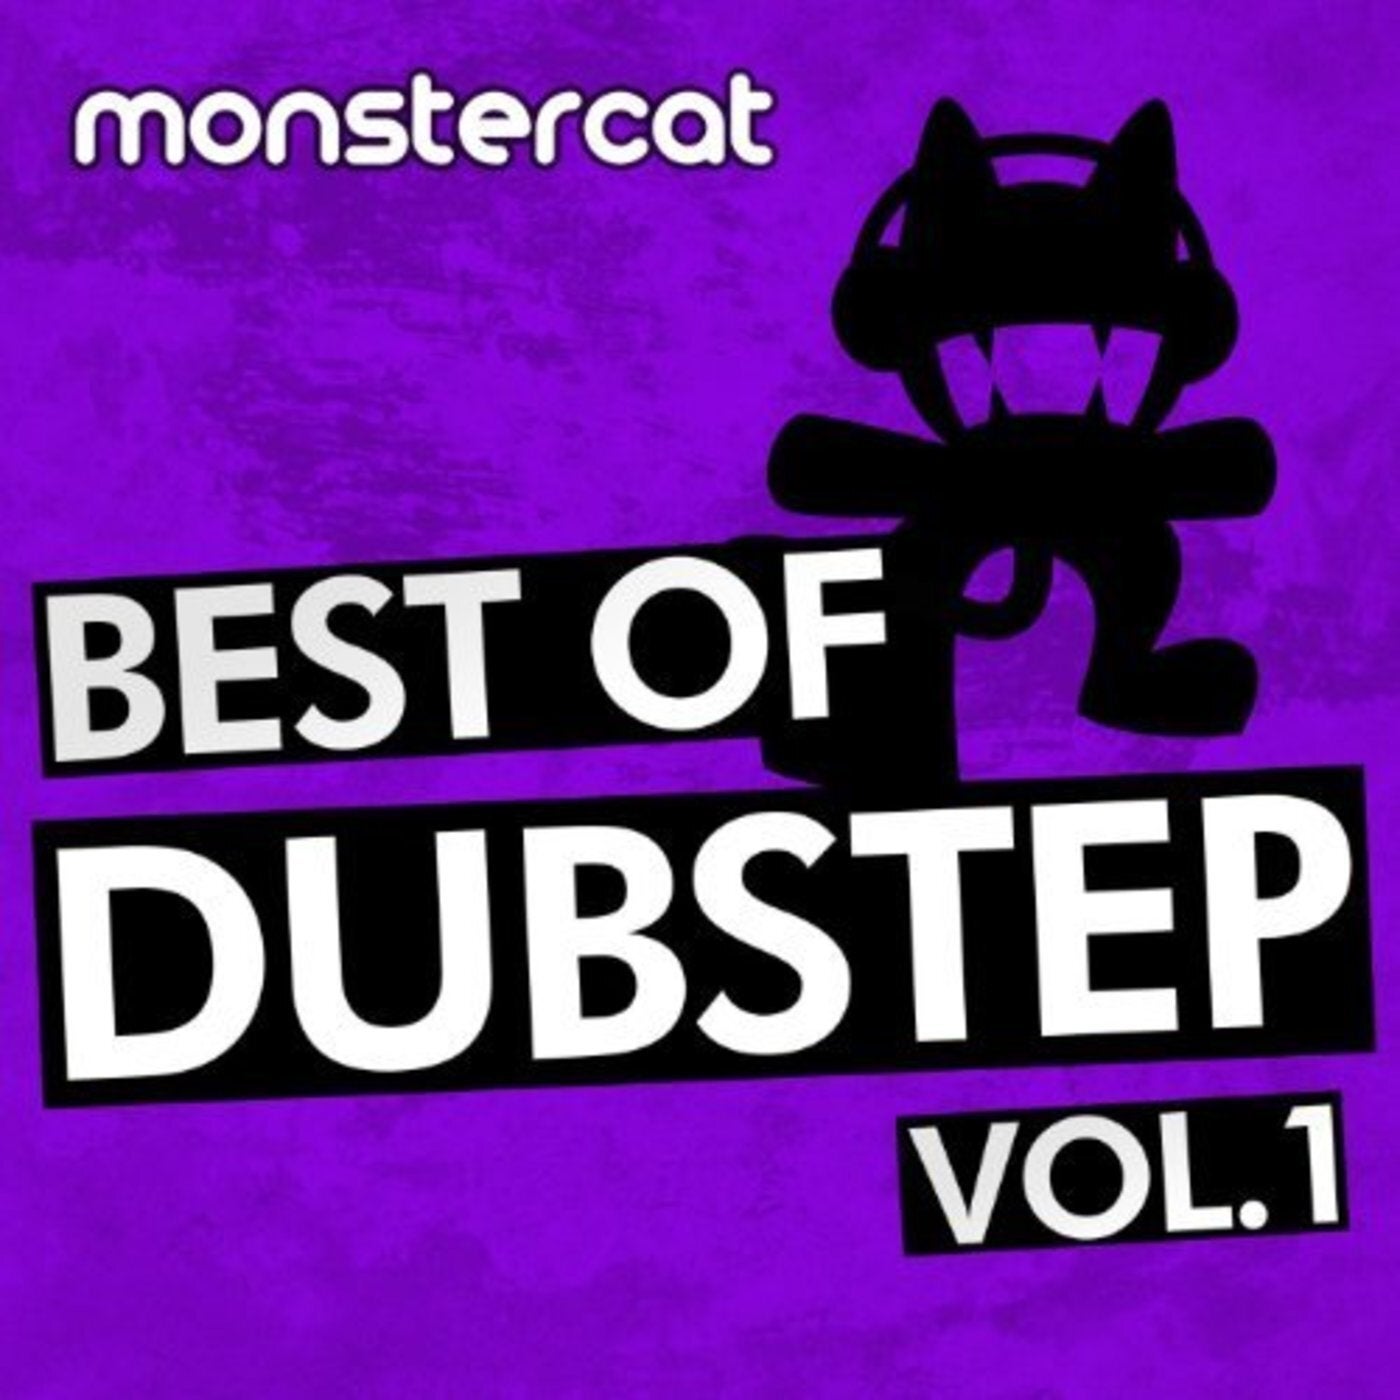 Monstercat - Best of Dubstep Vol. 1